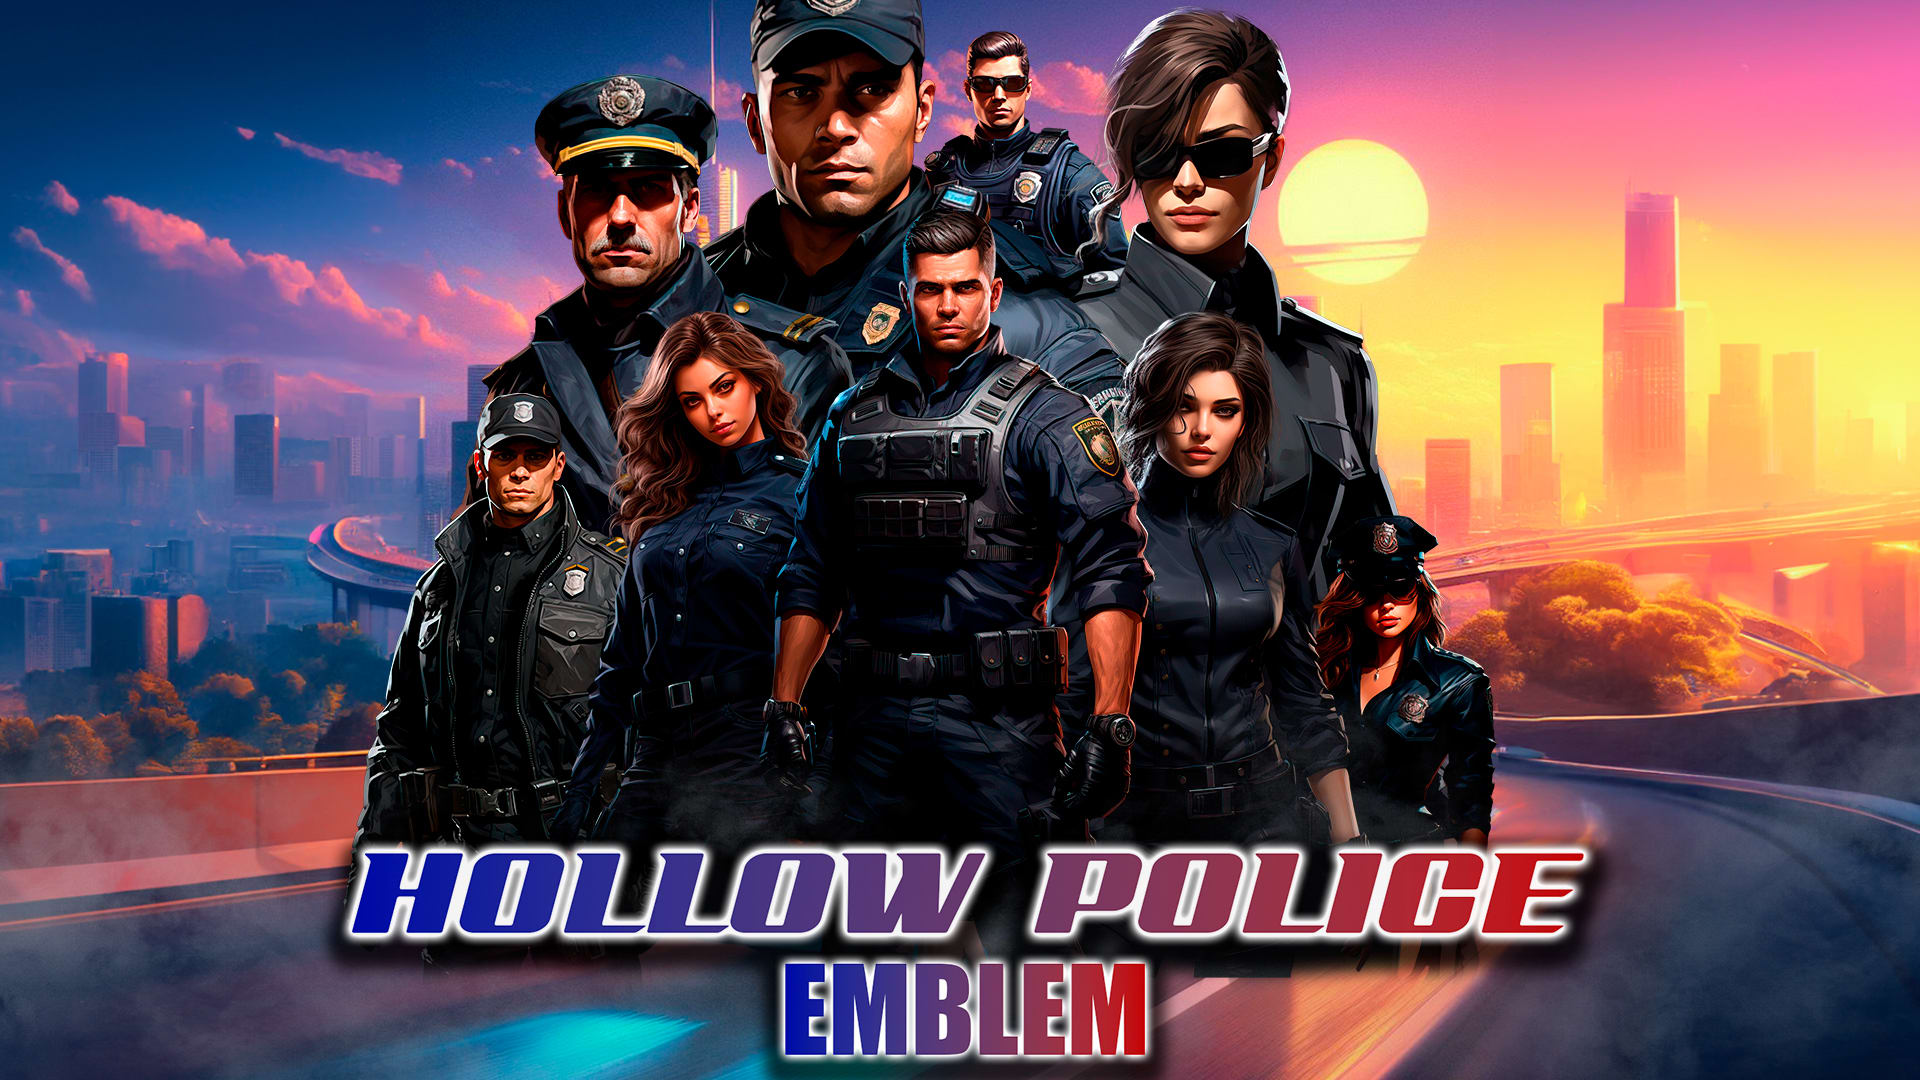 Hollow Police Emblem: The Visual Novel